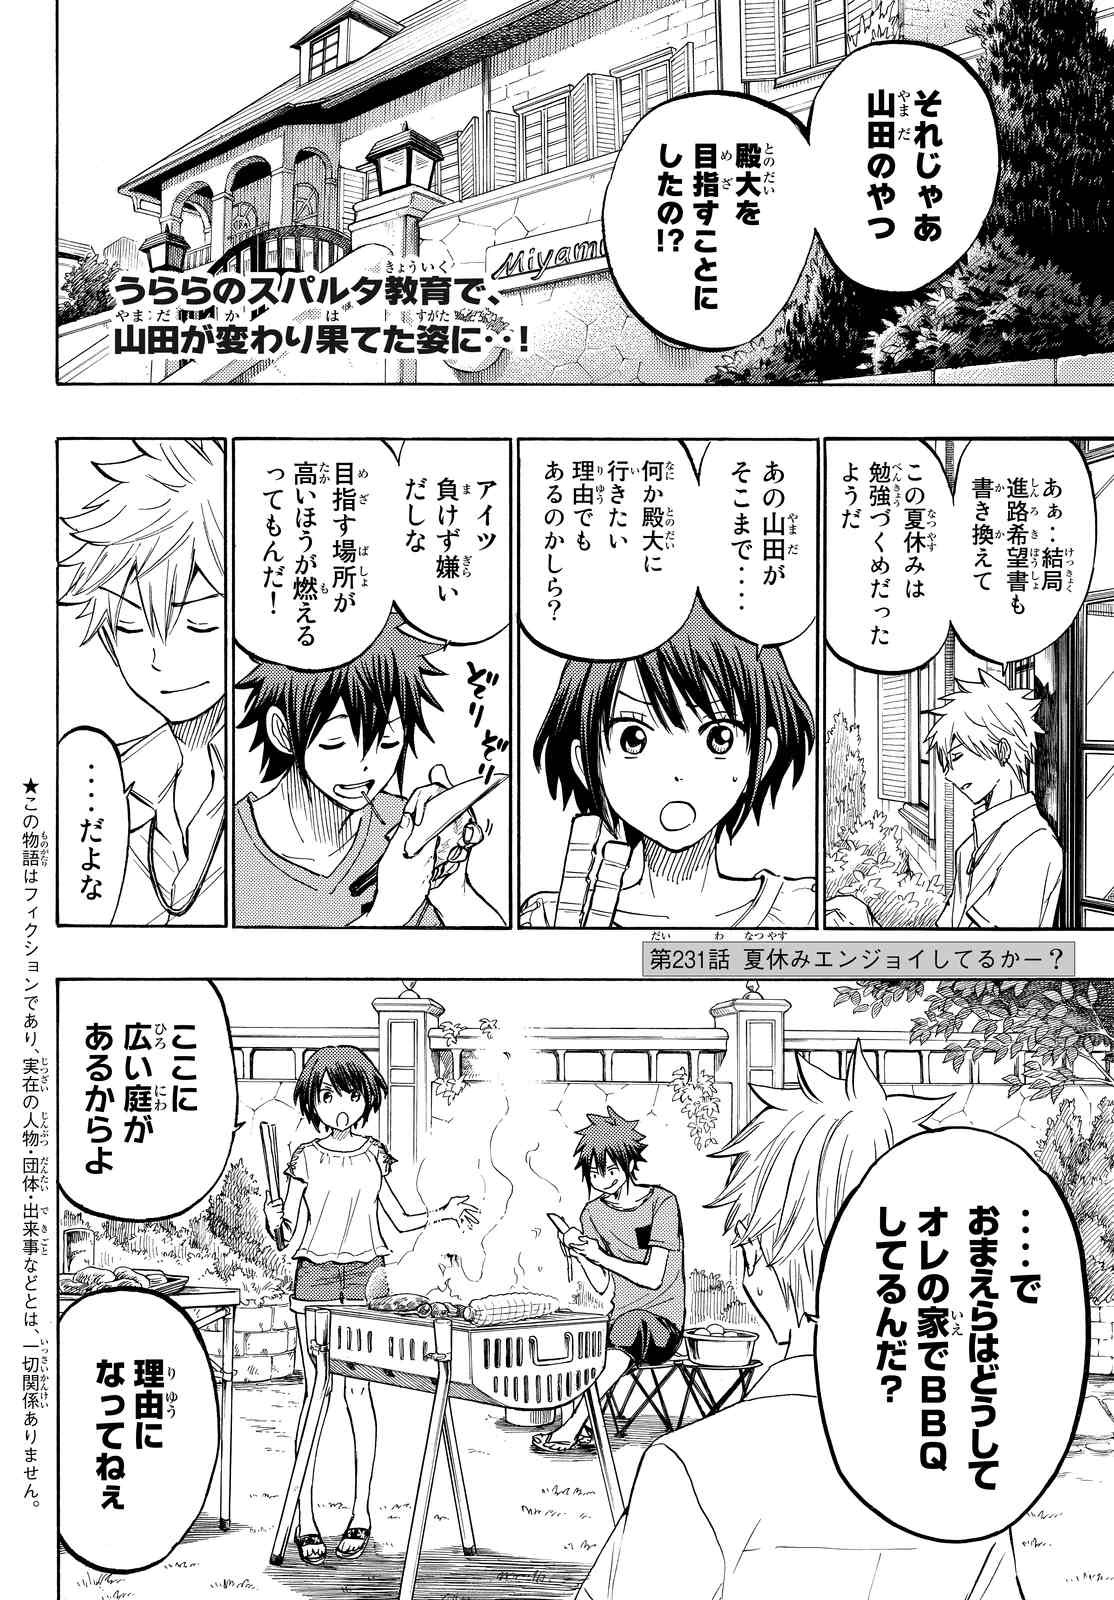 Yamada-kun to 7-nin no Majo - Chapter 231 - Page 2